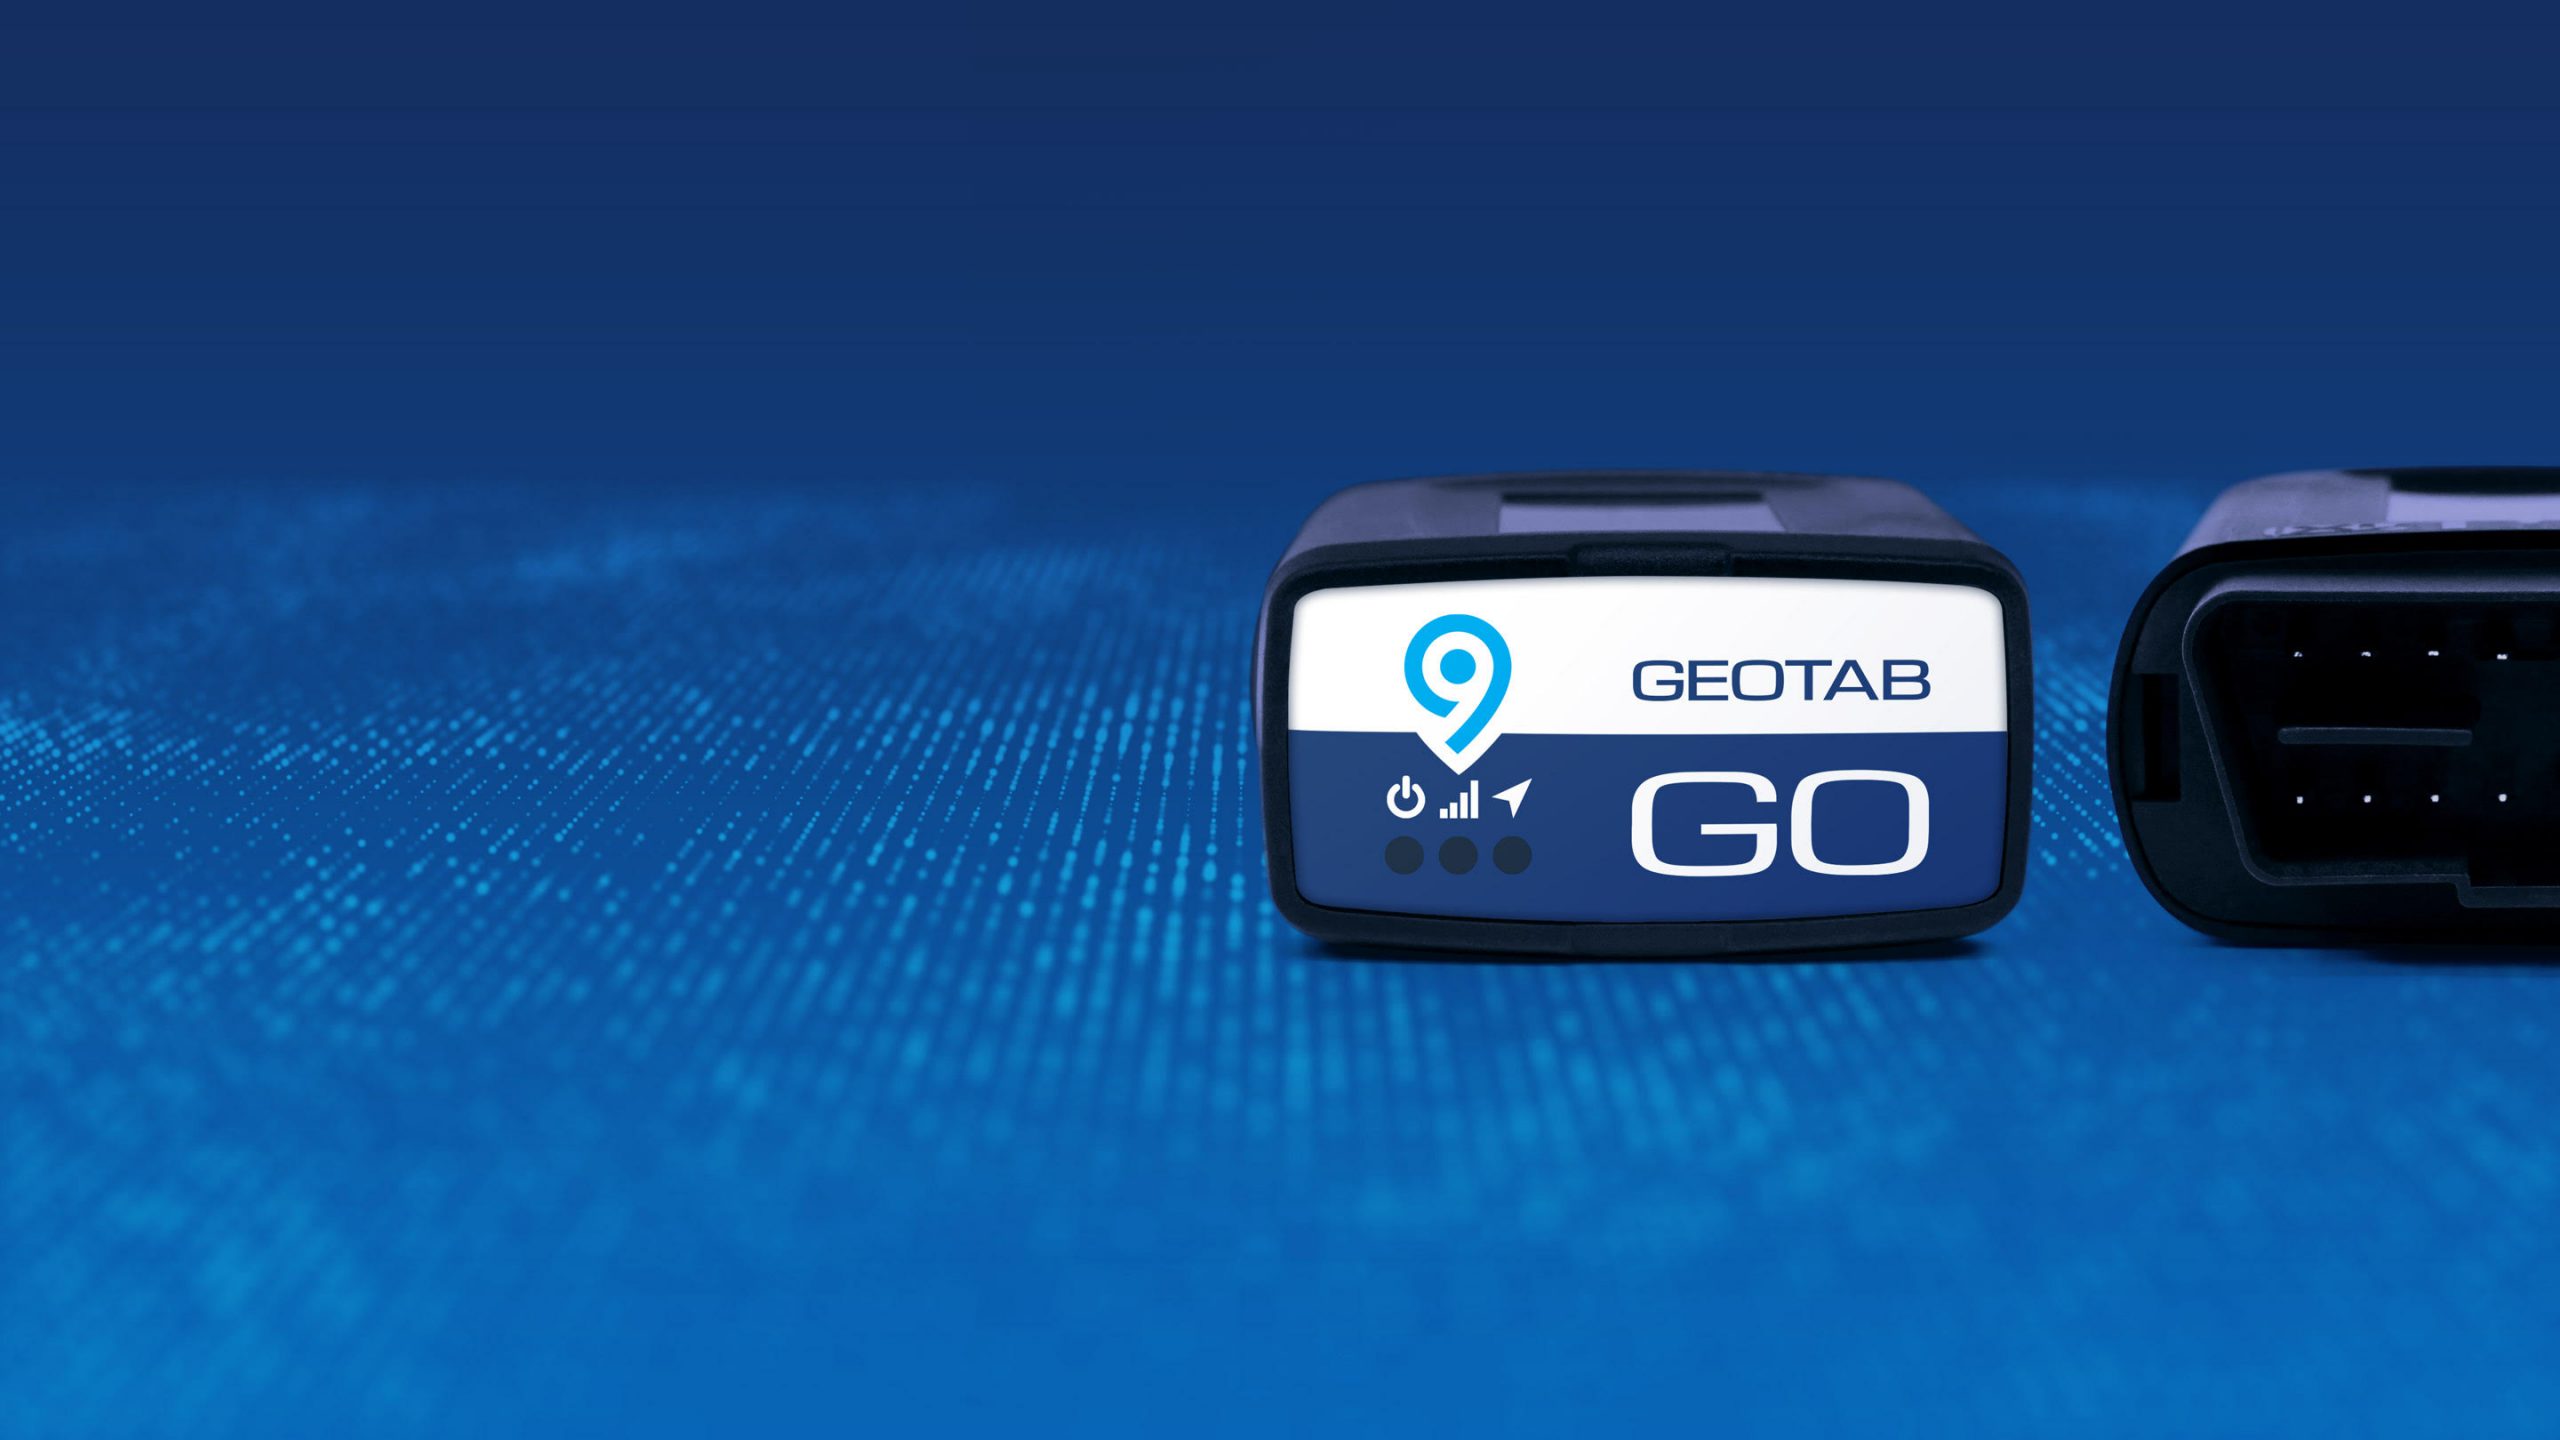 Geotab GO device